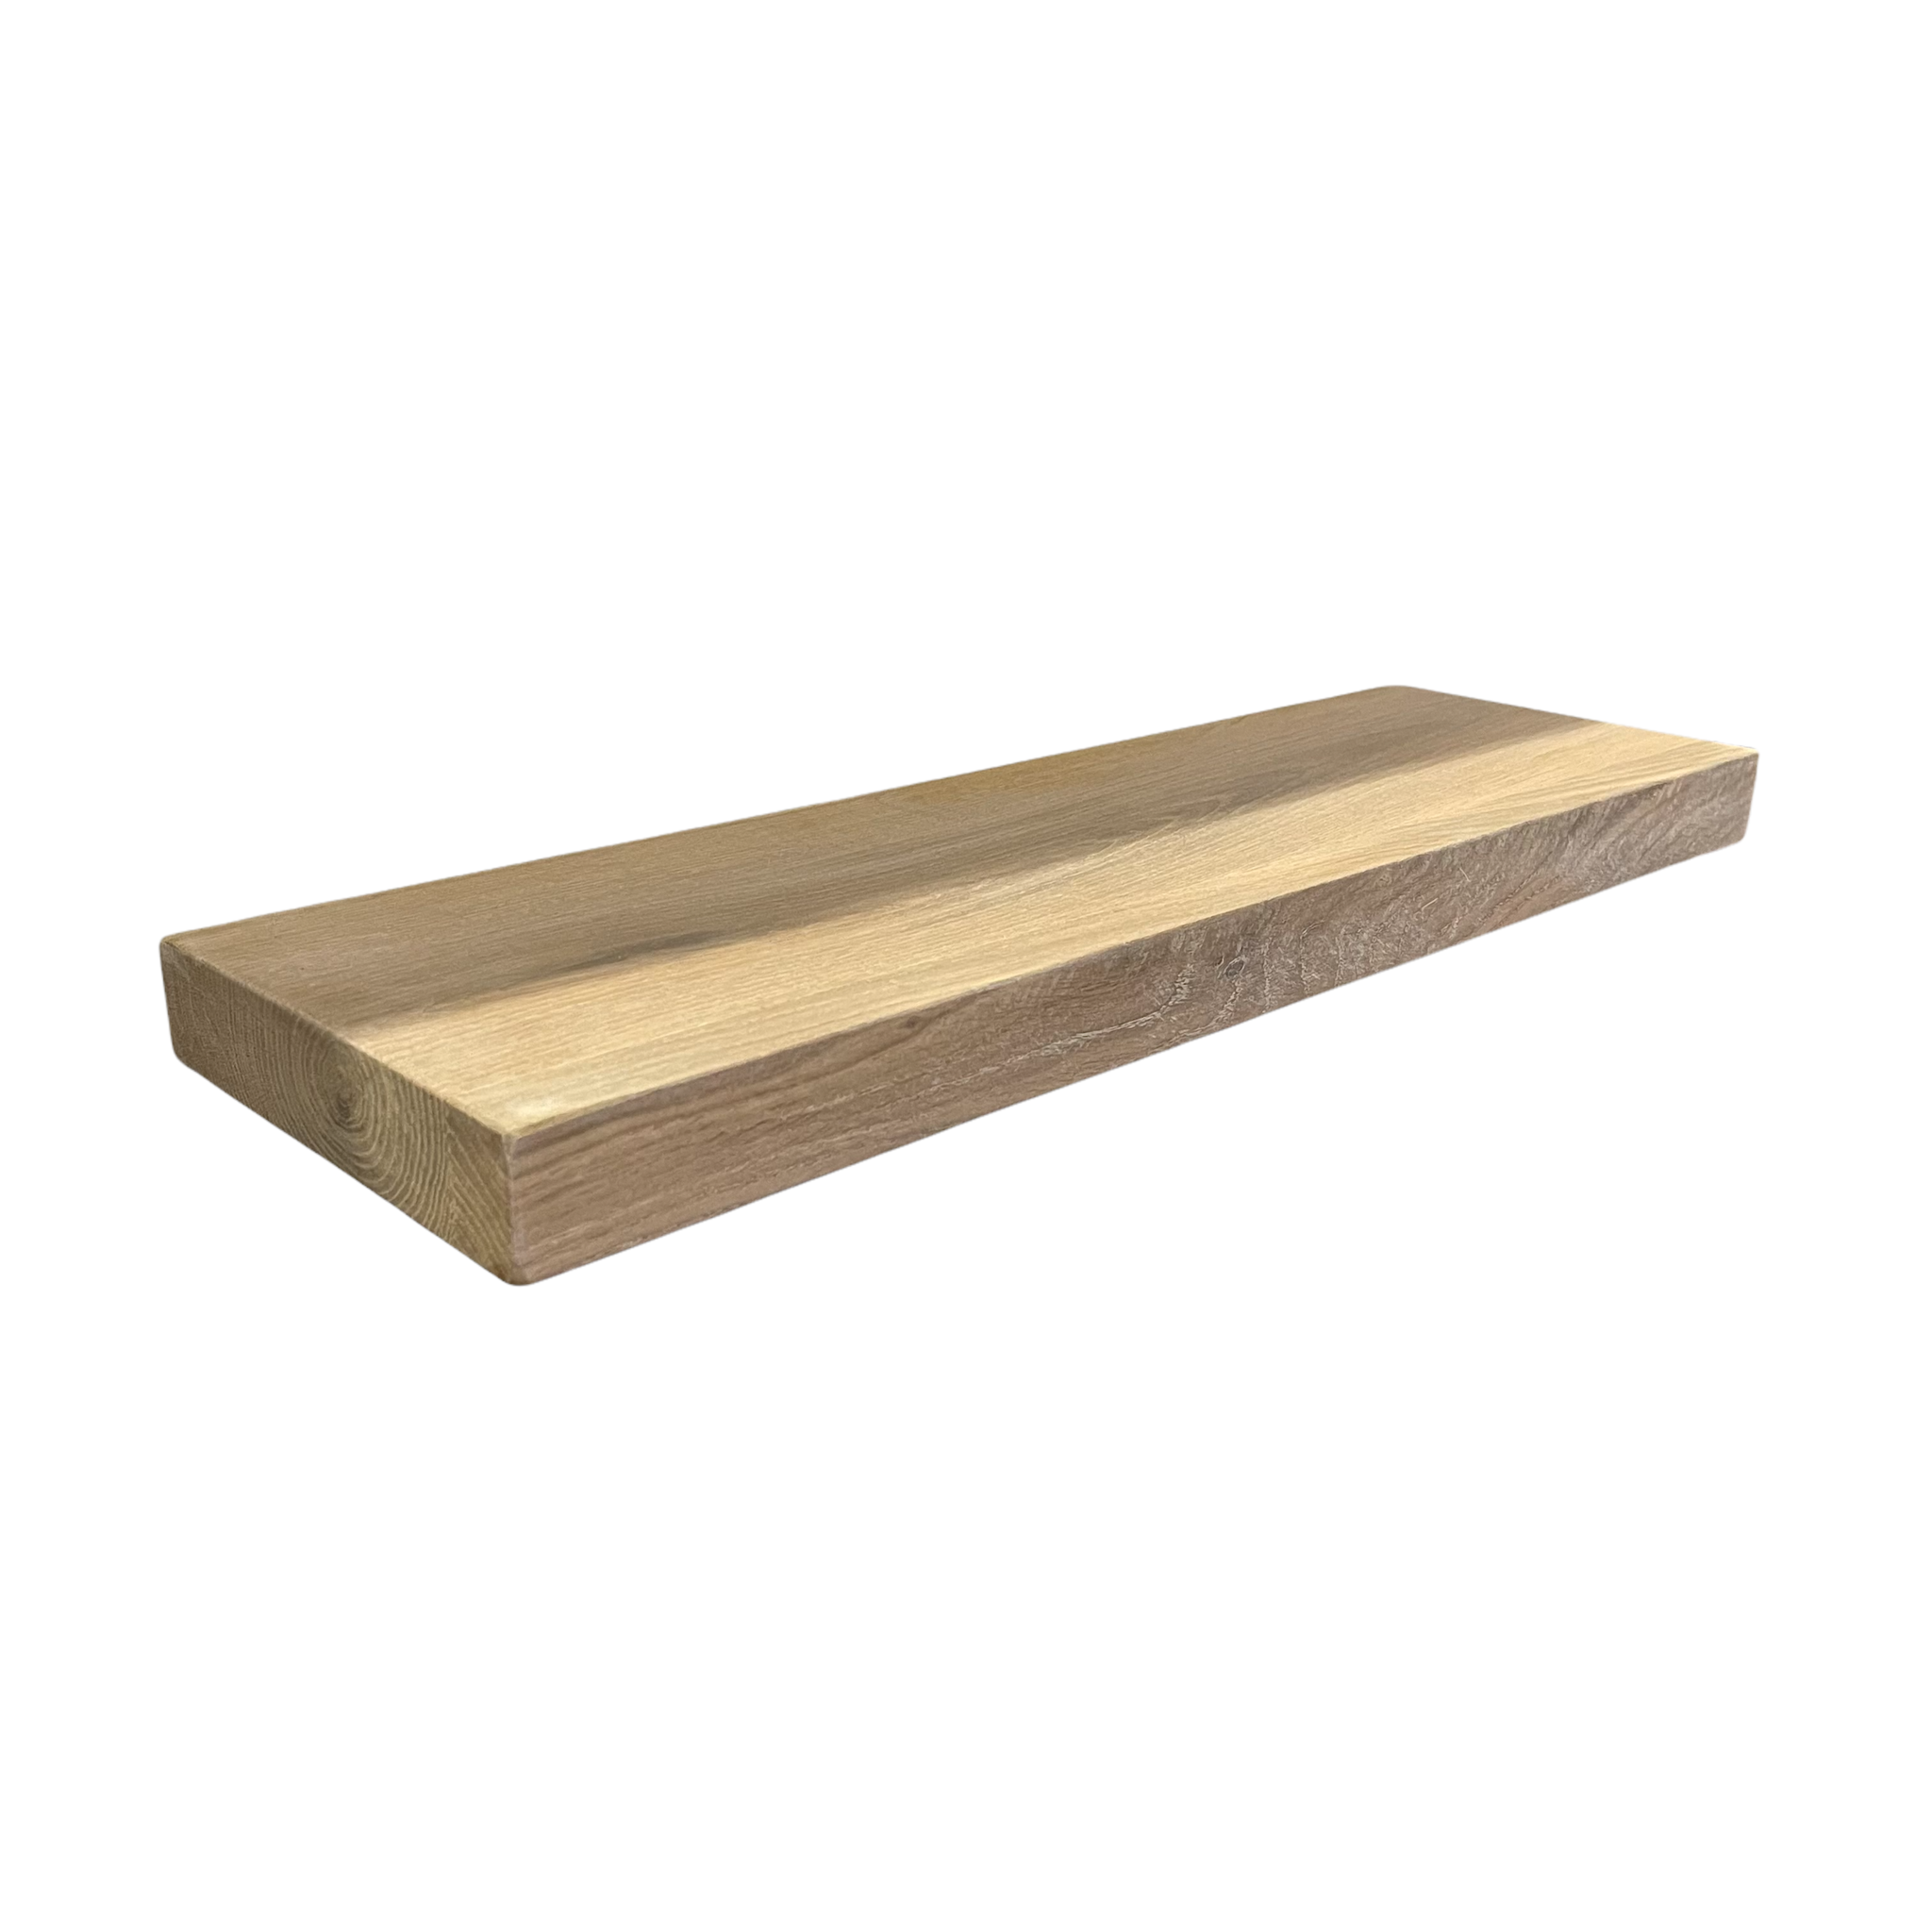 Effectief Wissen haalbaar Houten wandplank - Transparant/mat - Klein - 4cm dik eiken - Recht - Wood &  Work